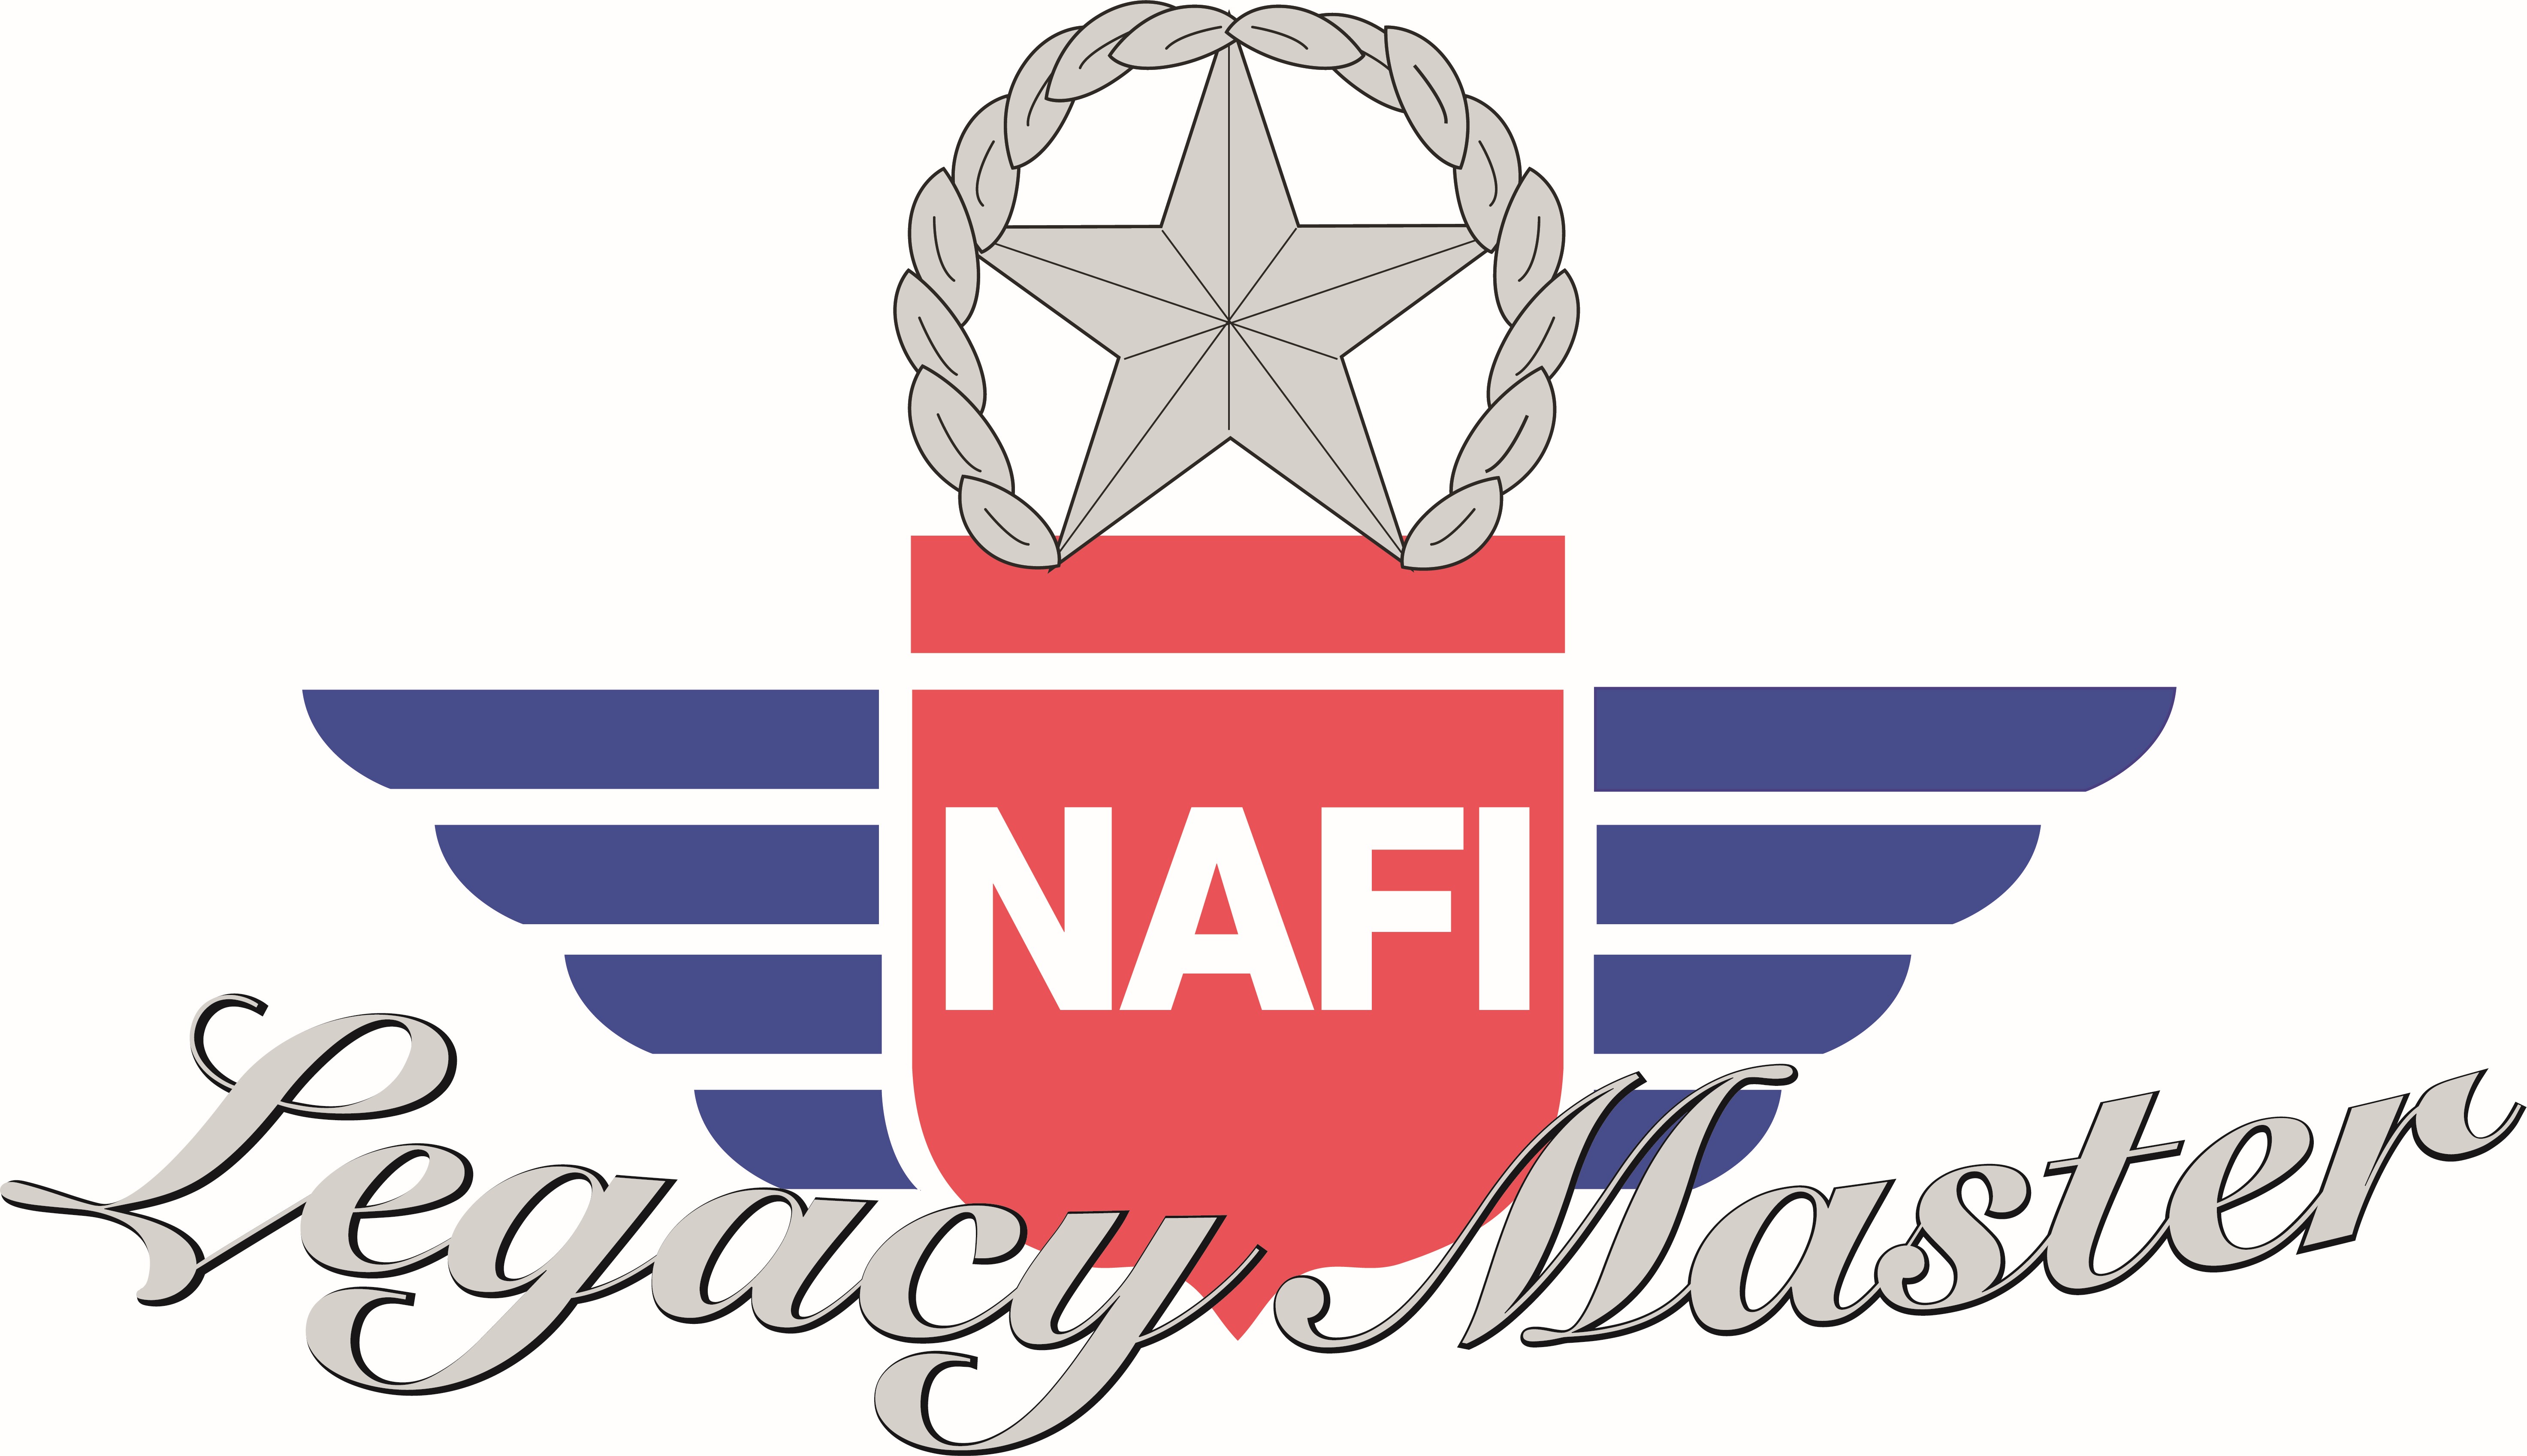 NAFI Legacy Master Instructor